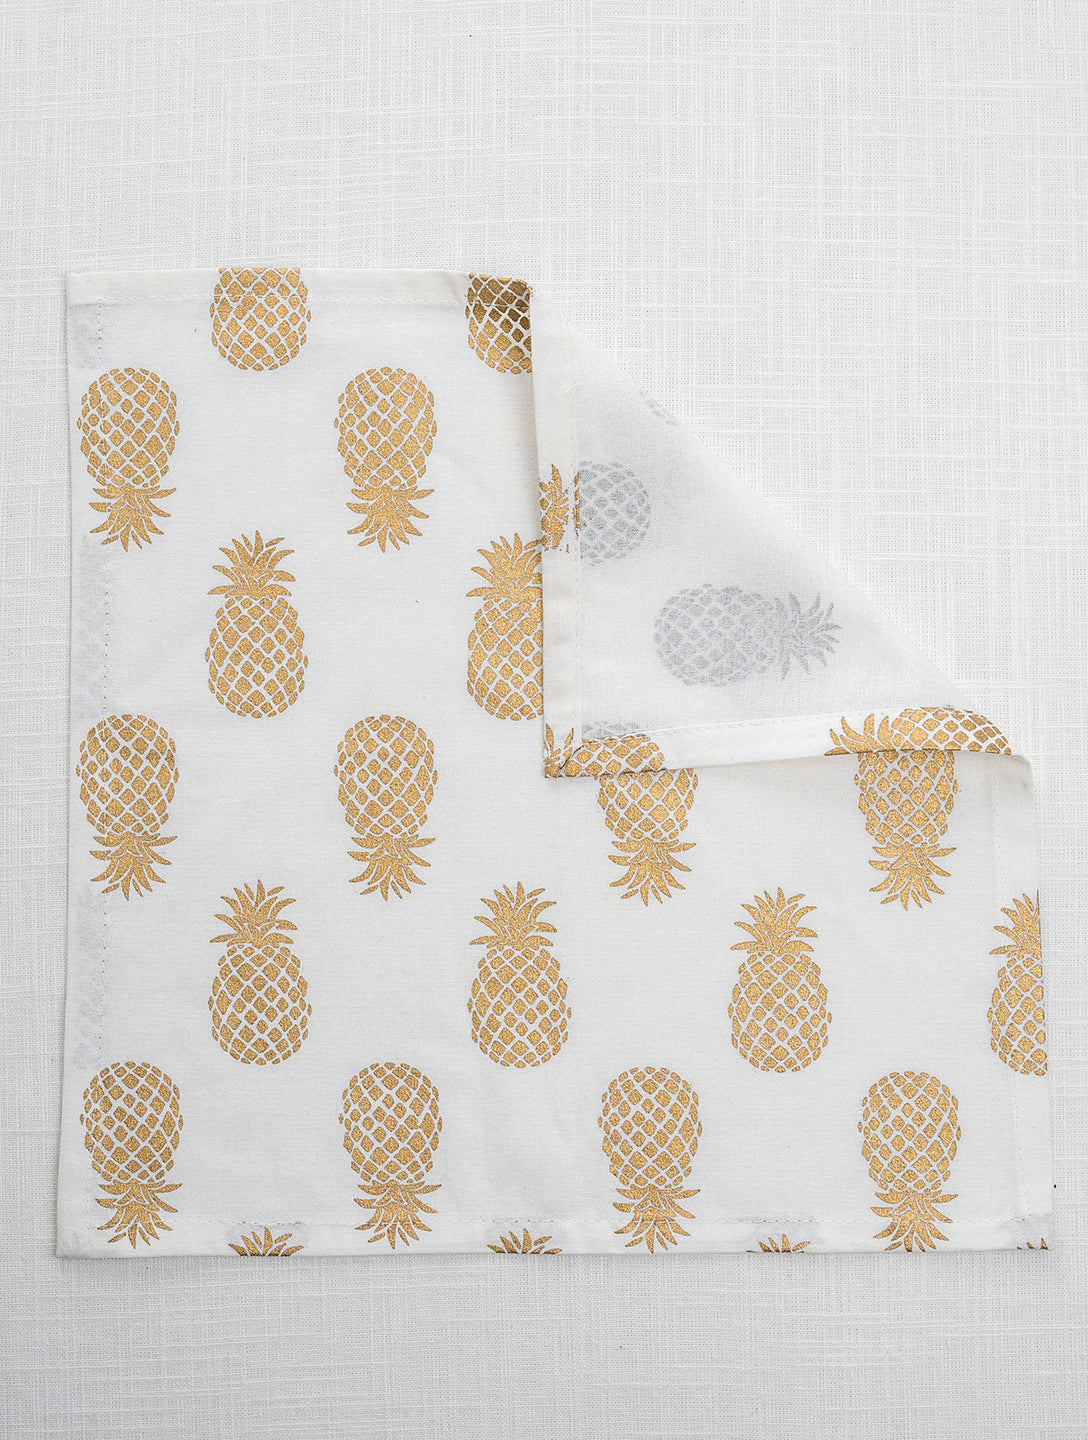 White Cotton Pineapple Printed 12x12 Inch Napkin Set of 6